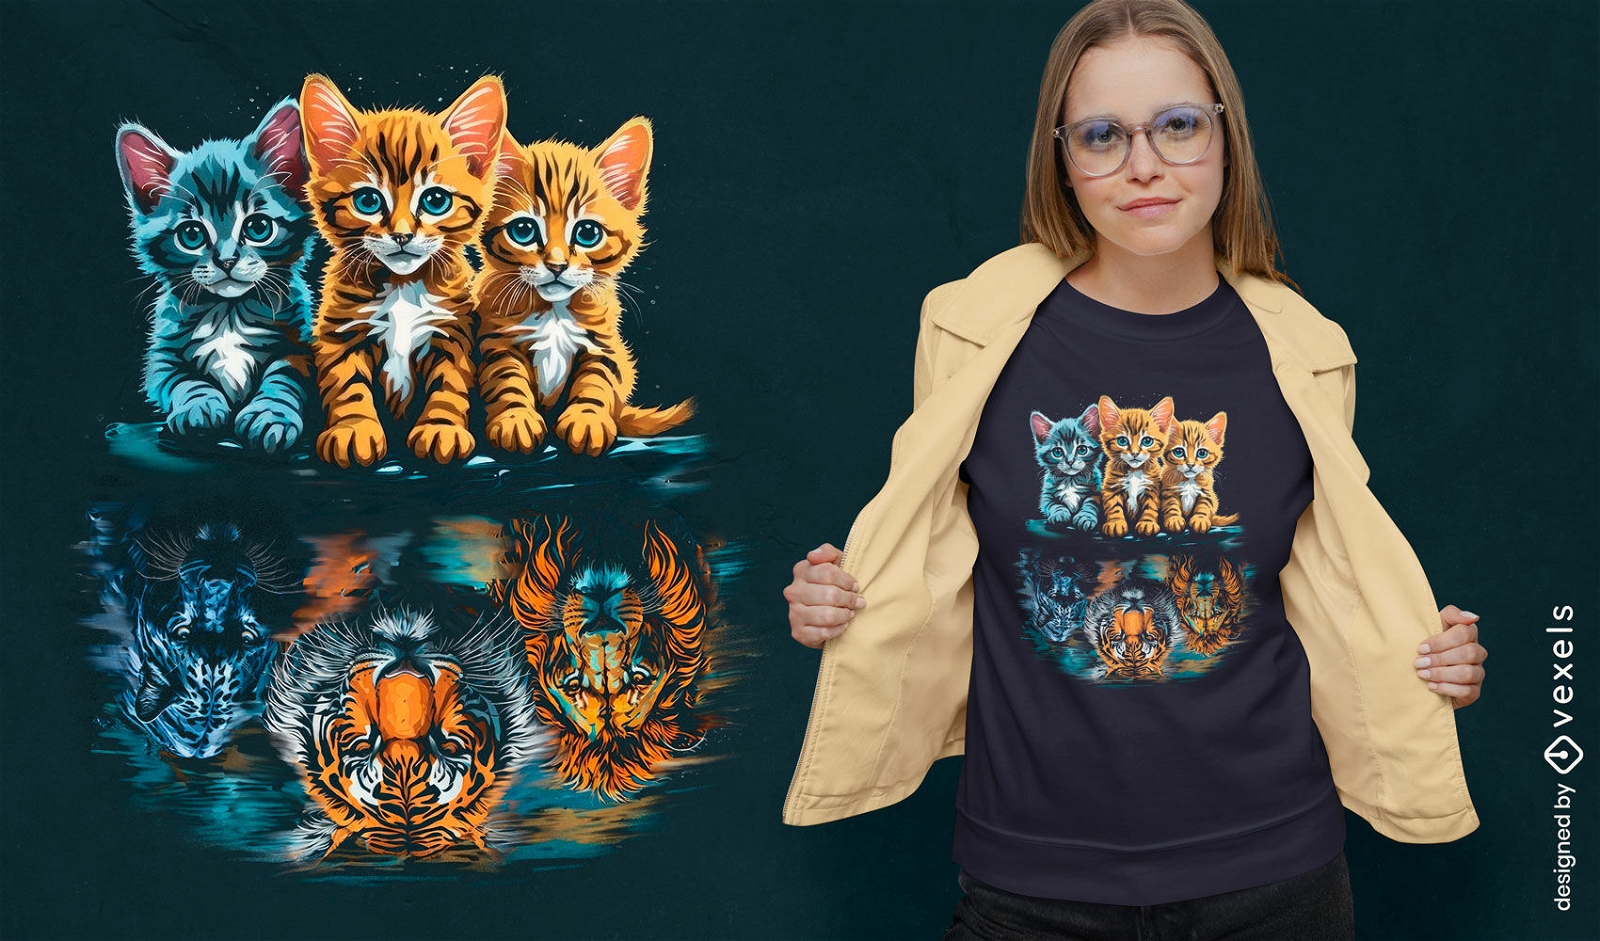 Adorable kitten trio t-shirt design